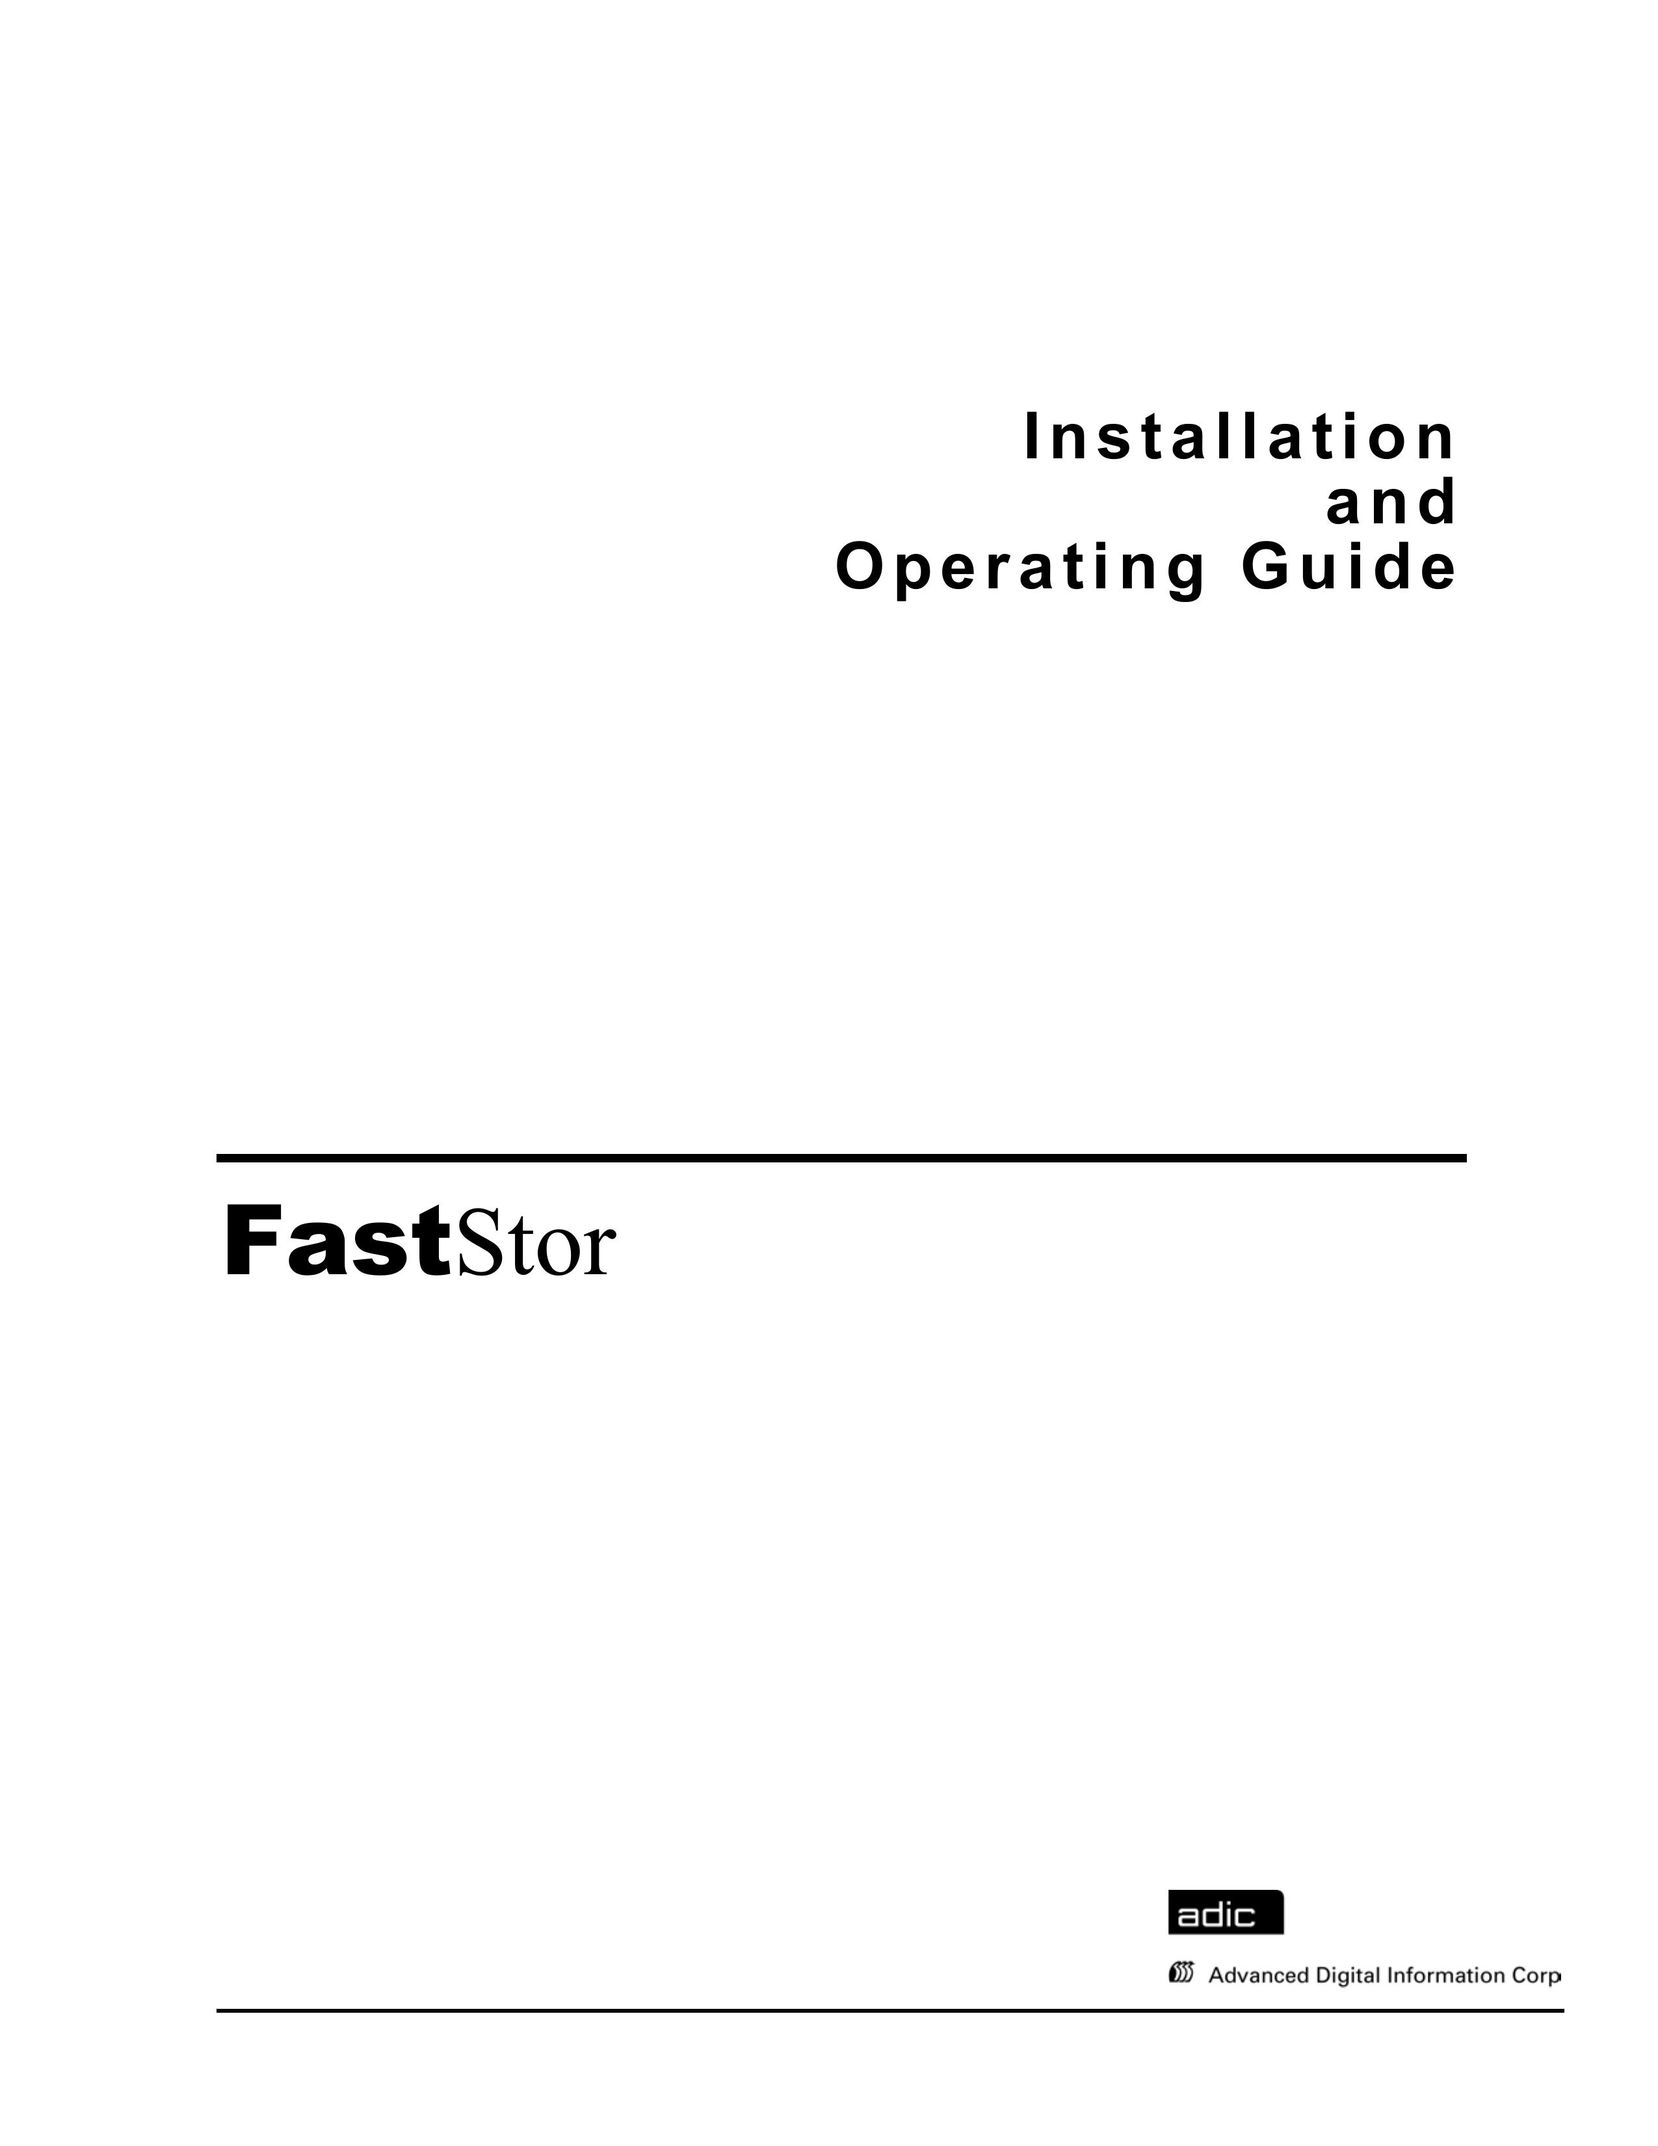 ADIC FastStor Mass Storage Device Network Card User Manual